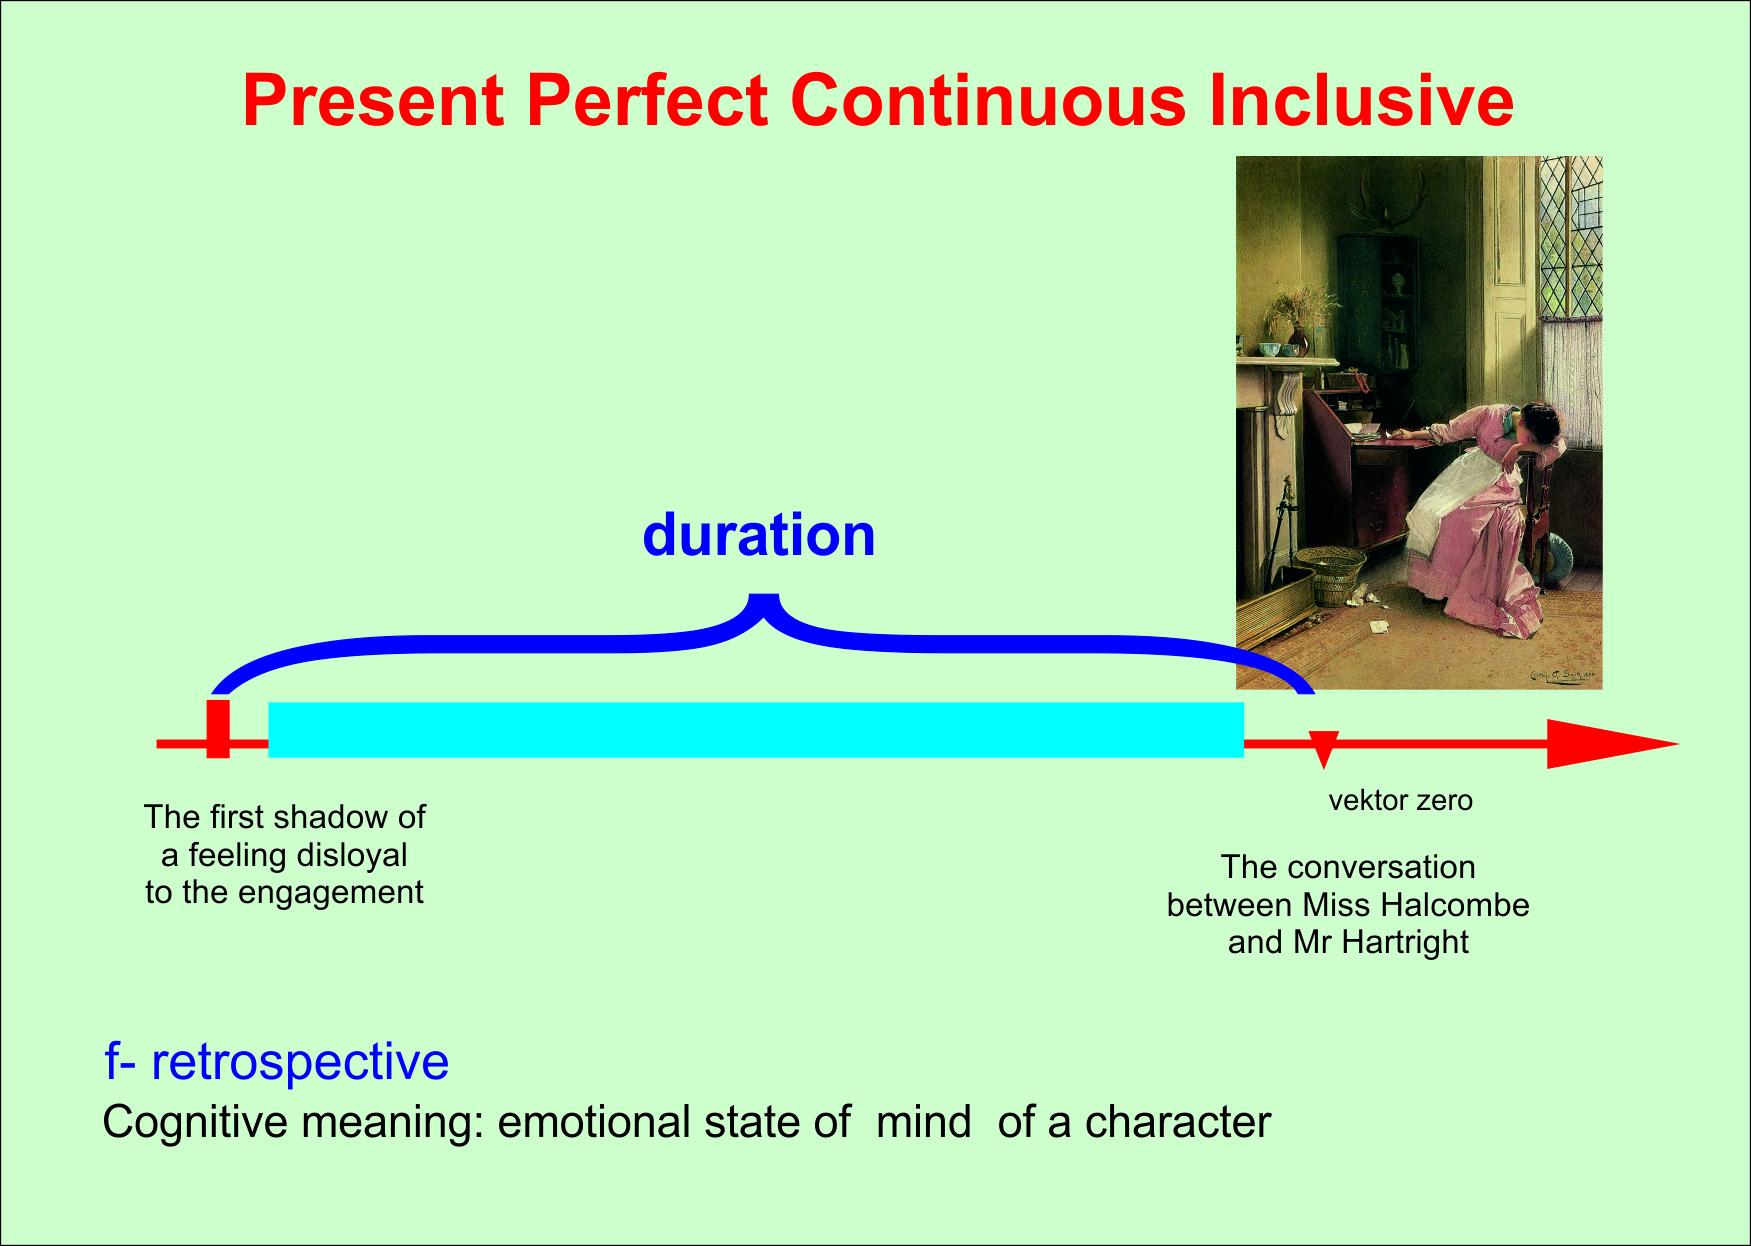 Present Perfect Continuous inclusive